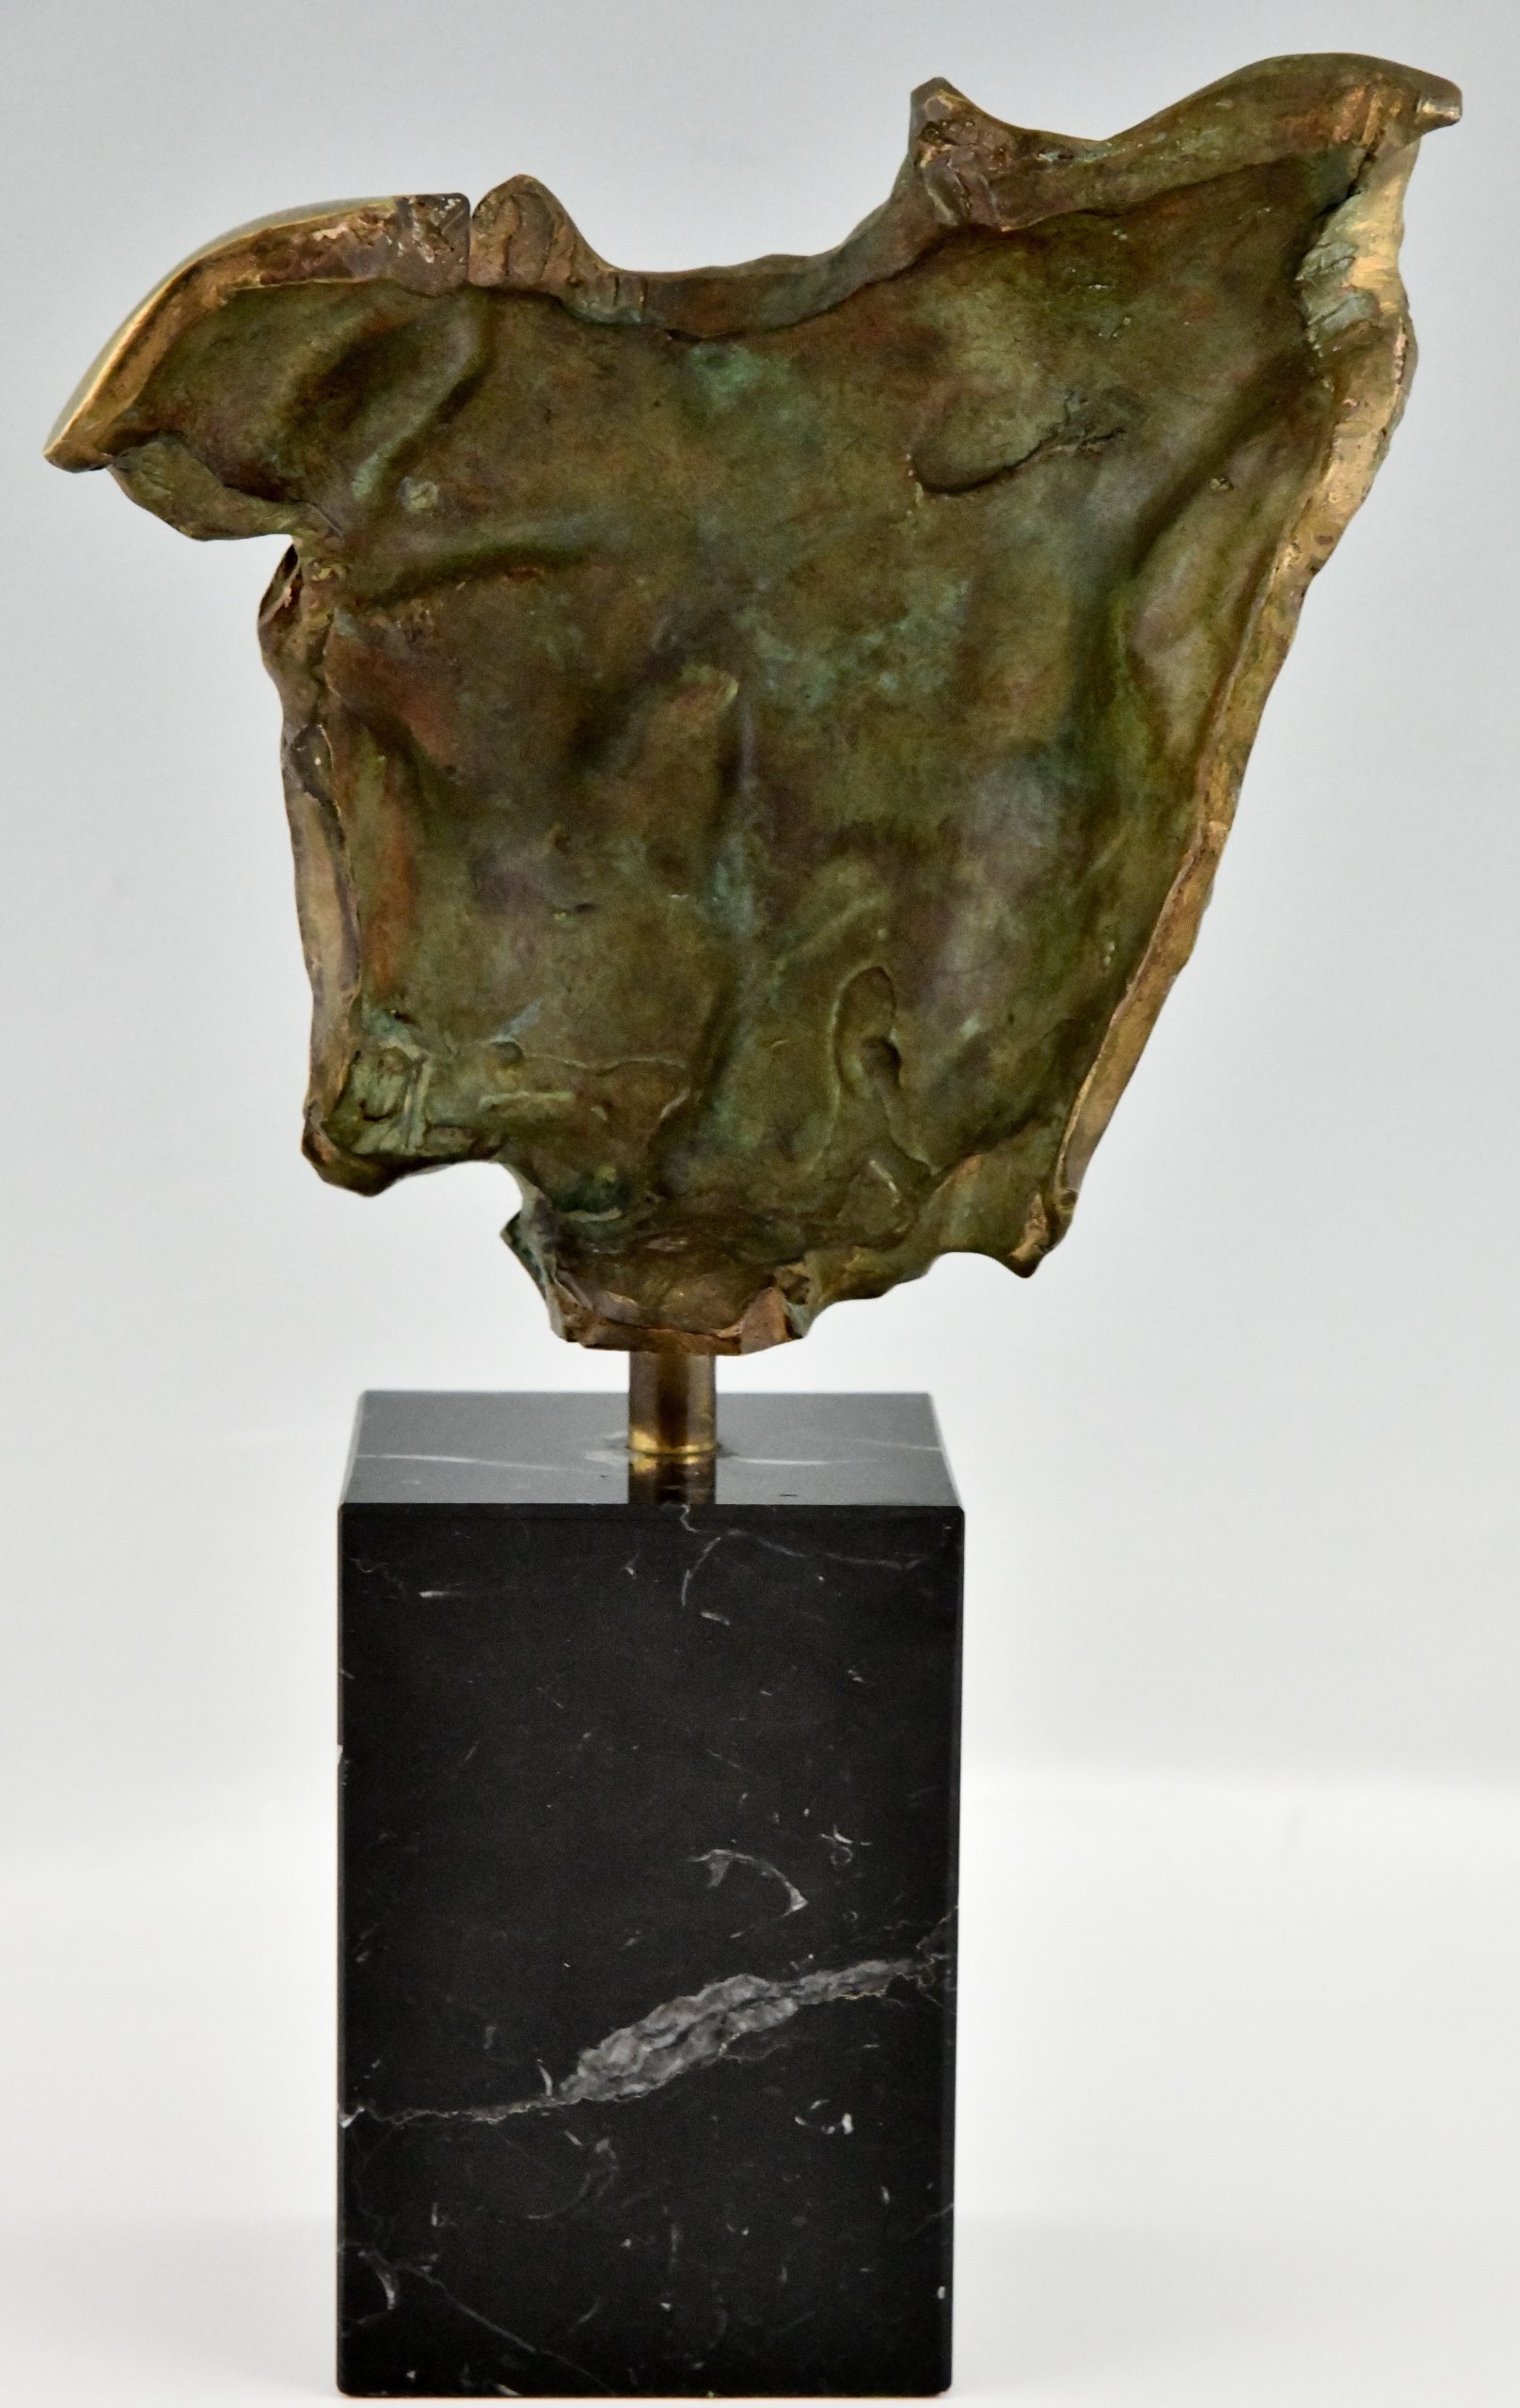 Sculpture en bronze 1970 torse masculin